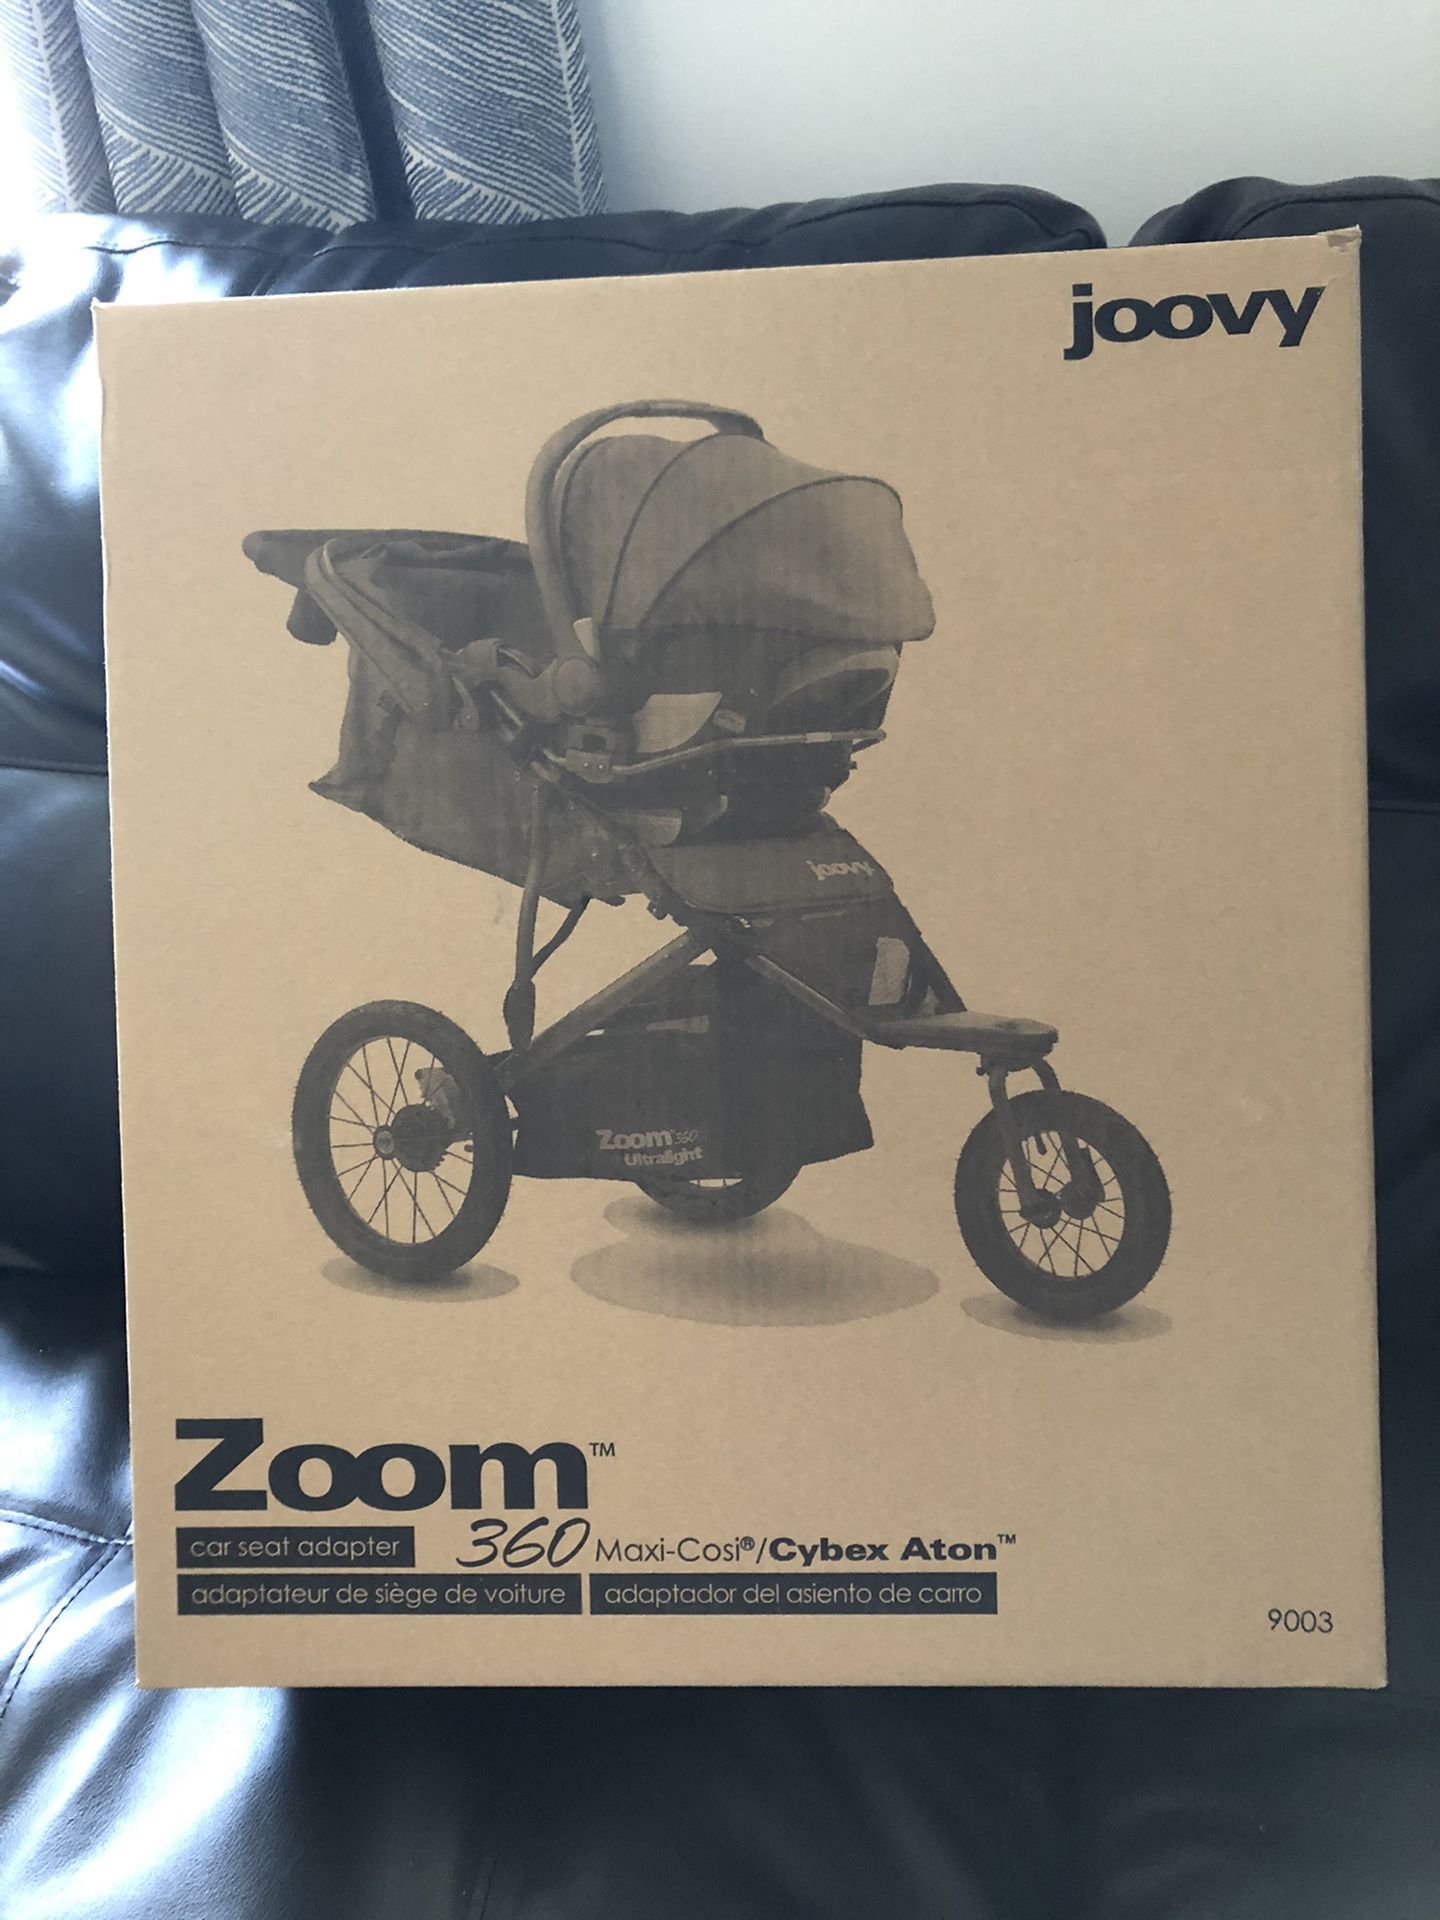 Joovy Zoom 360 Car Seat Adapter